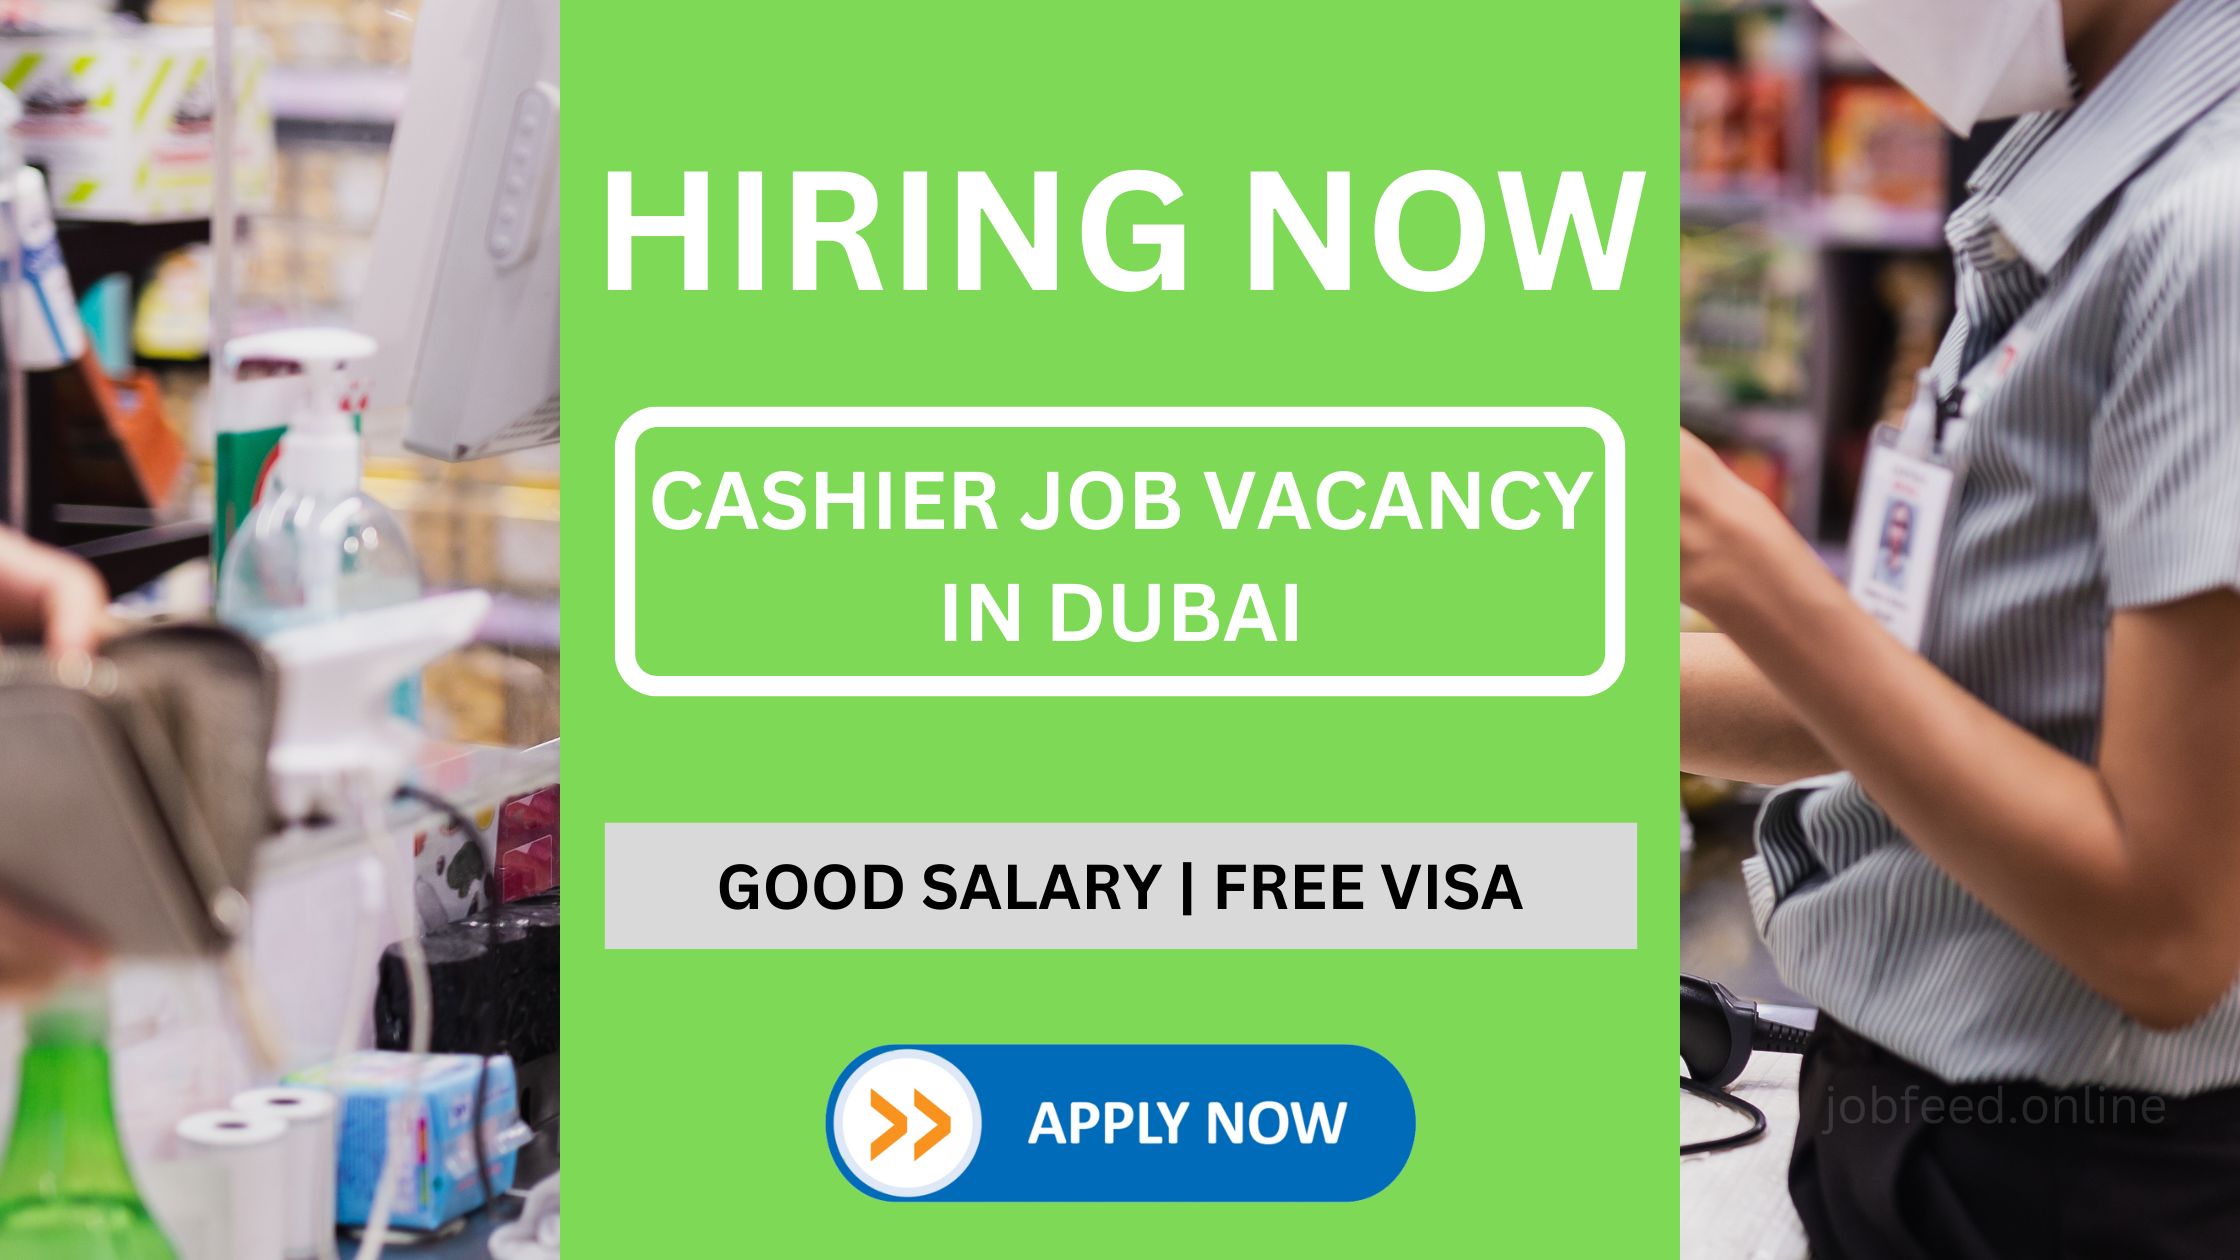 Cashier Job Vacancy: Juma Al Majid Holding Group